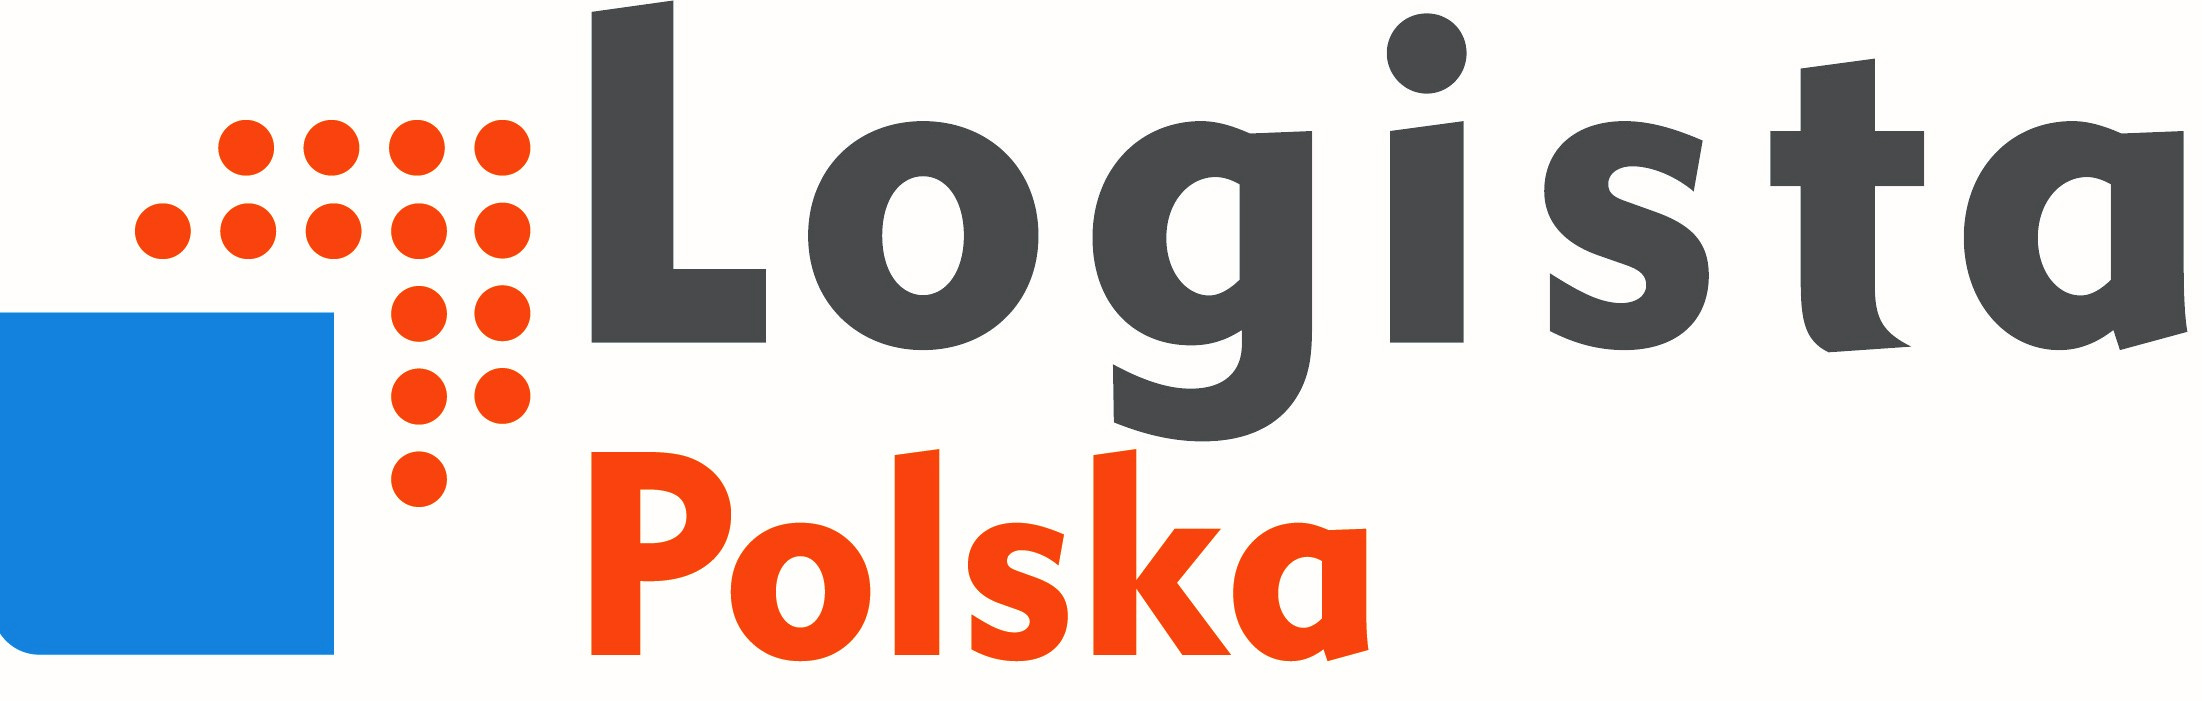 Logista Polska rekomenduje szkolenia firmy Delta Training